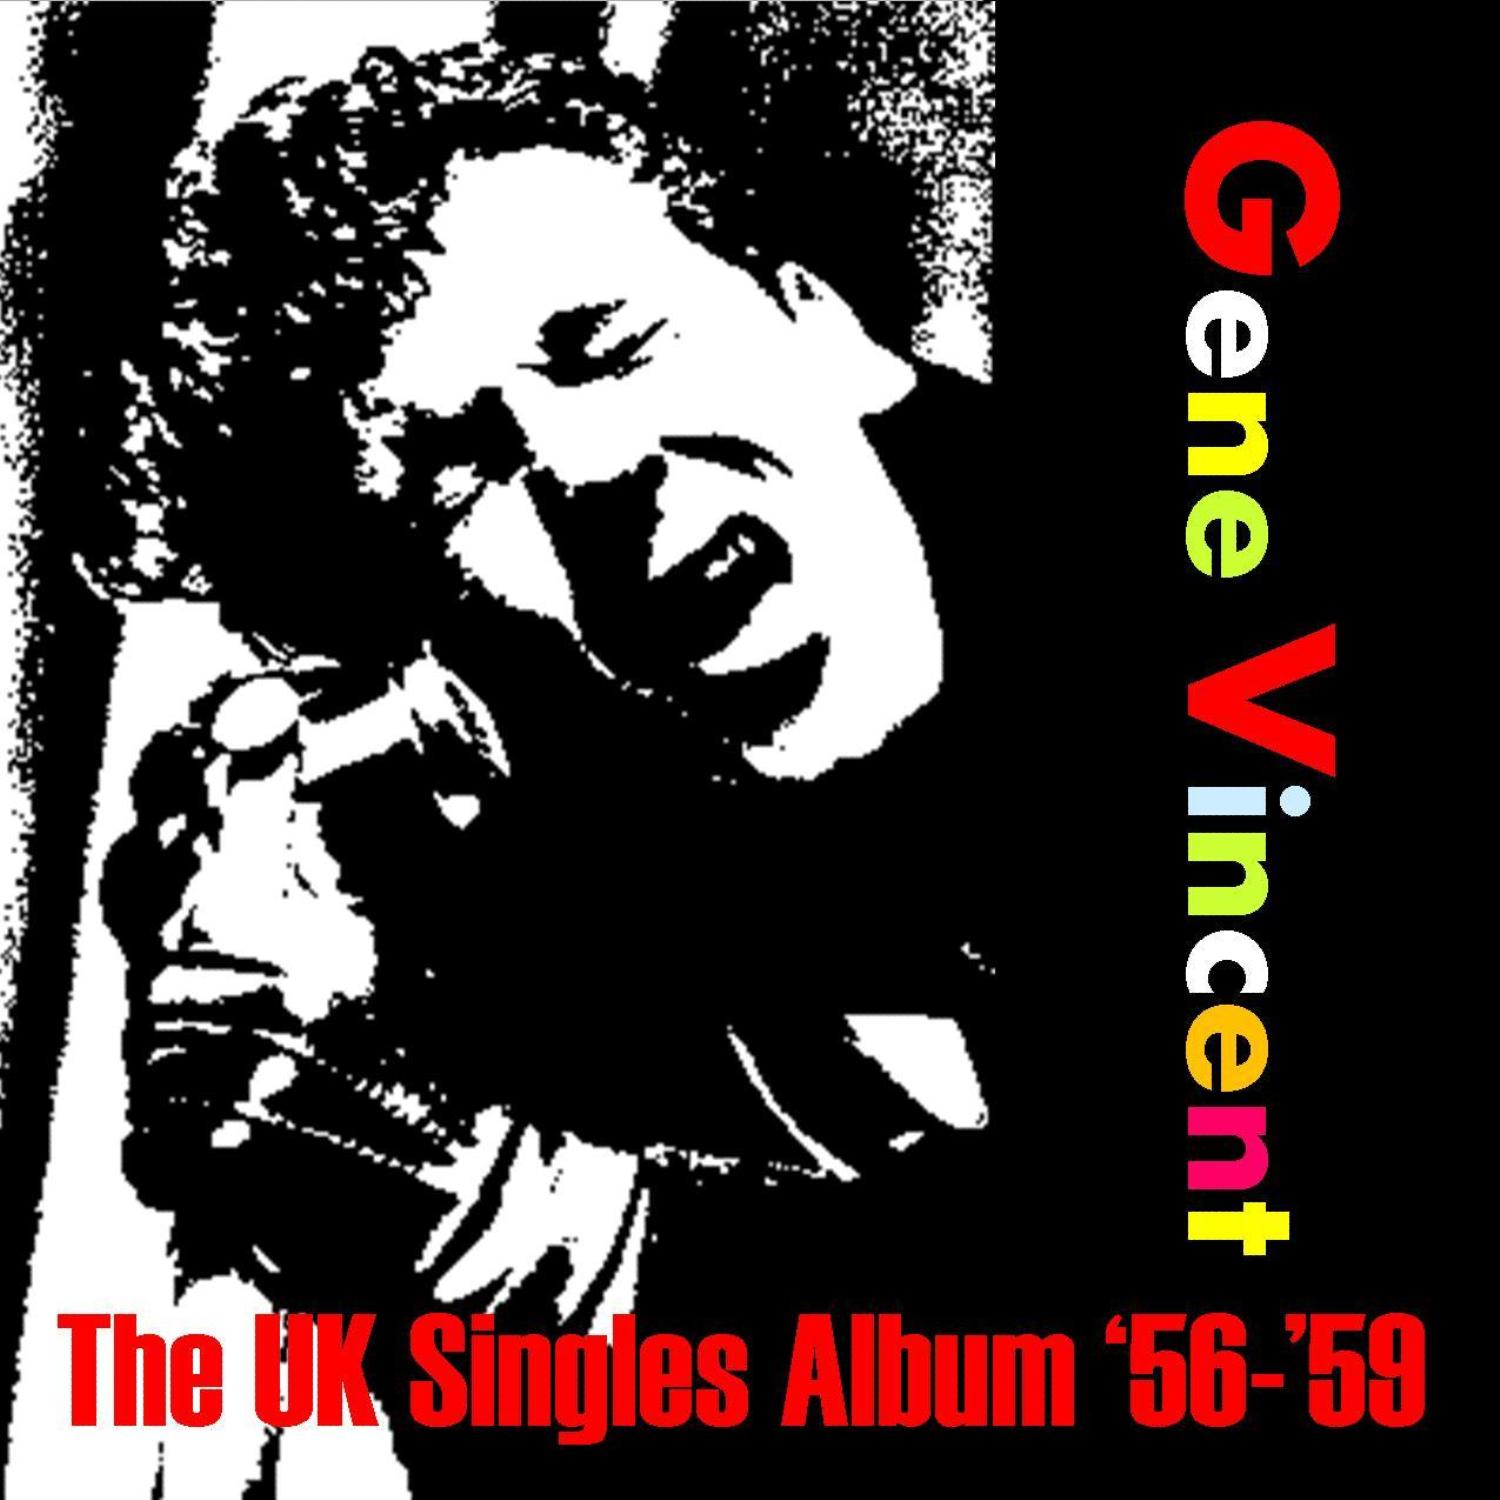 The Uk Singles Album '56-'59